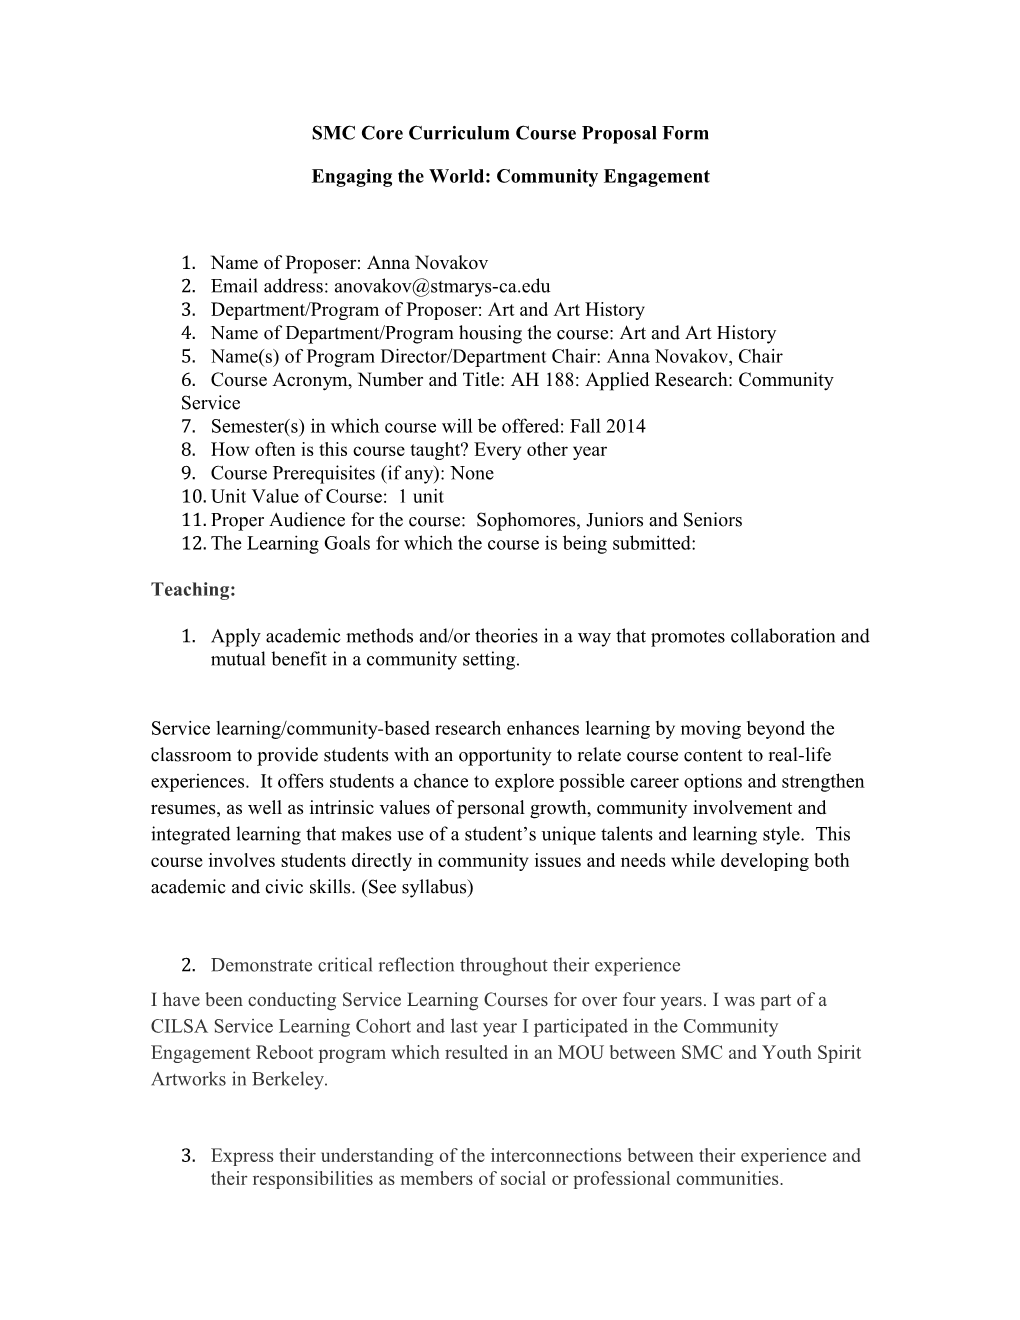 SMC Core Curriculum Course Proposal Form s1